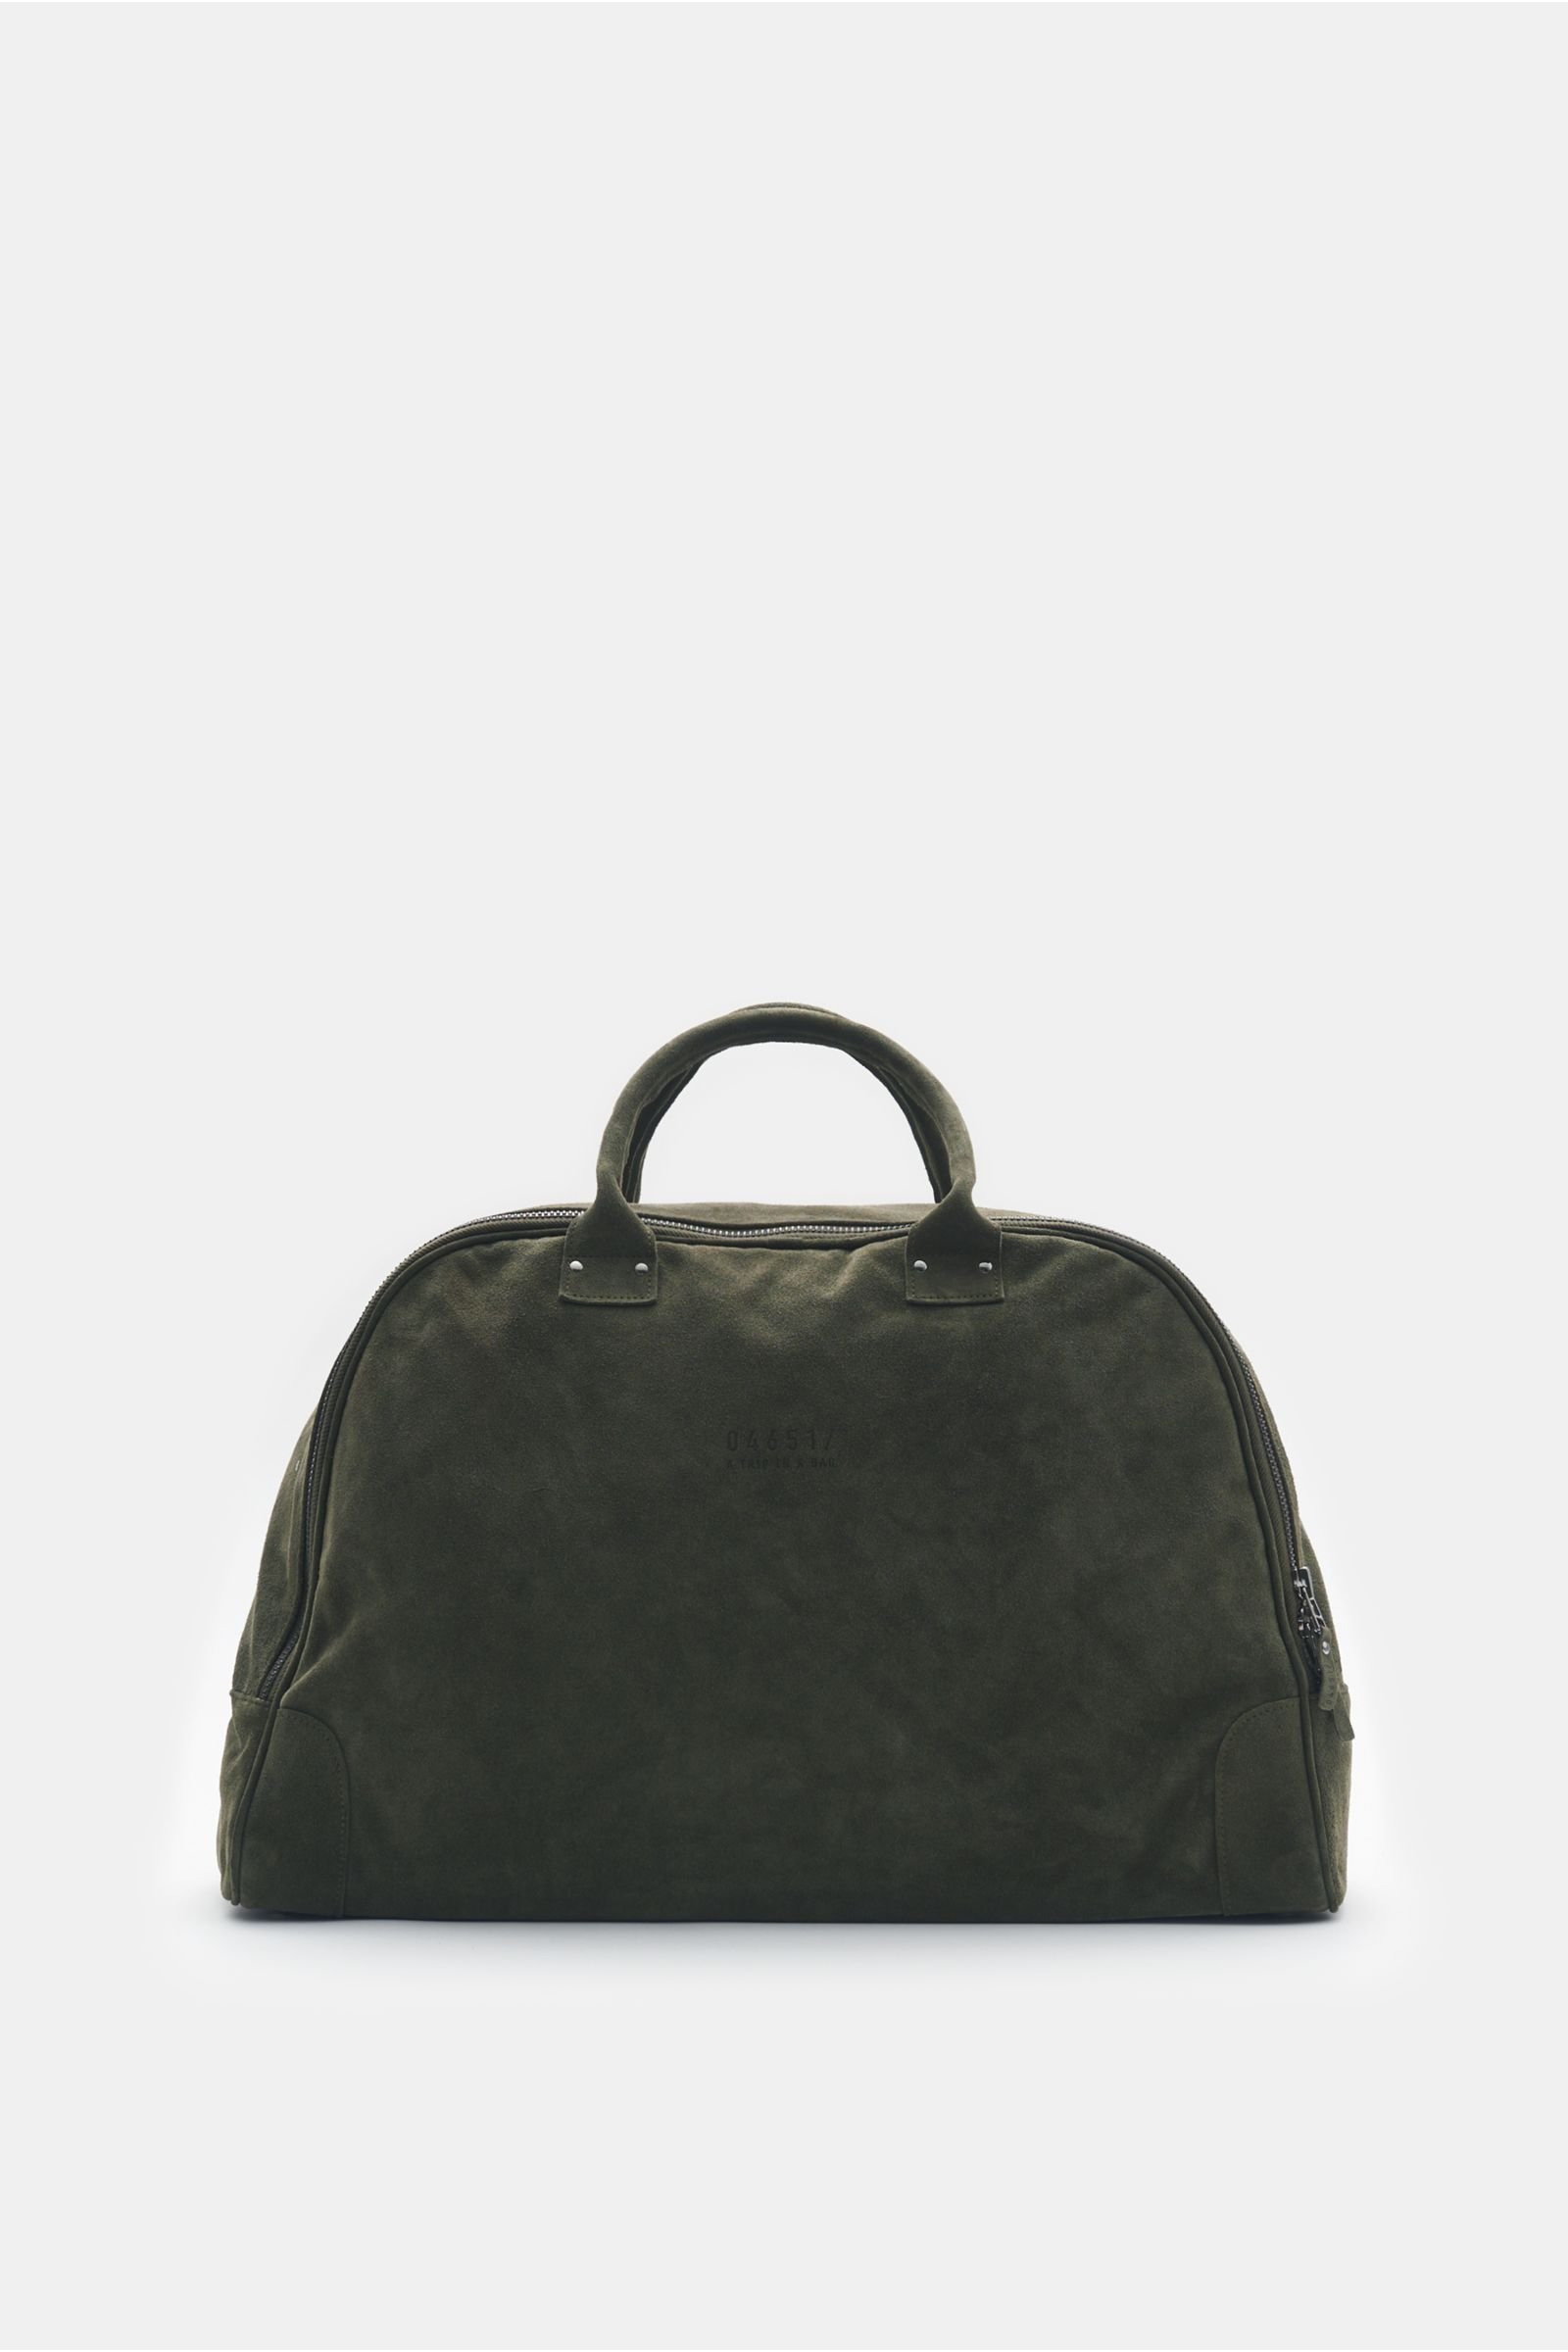 Weekender '356 Bag' olive